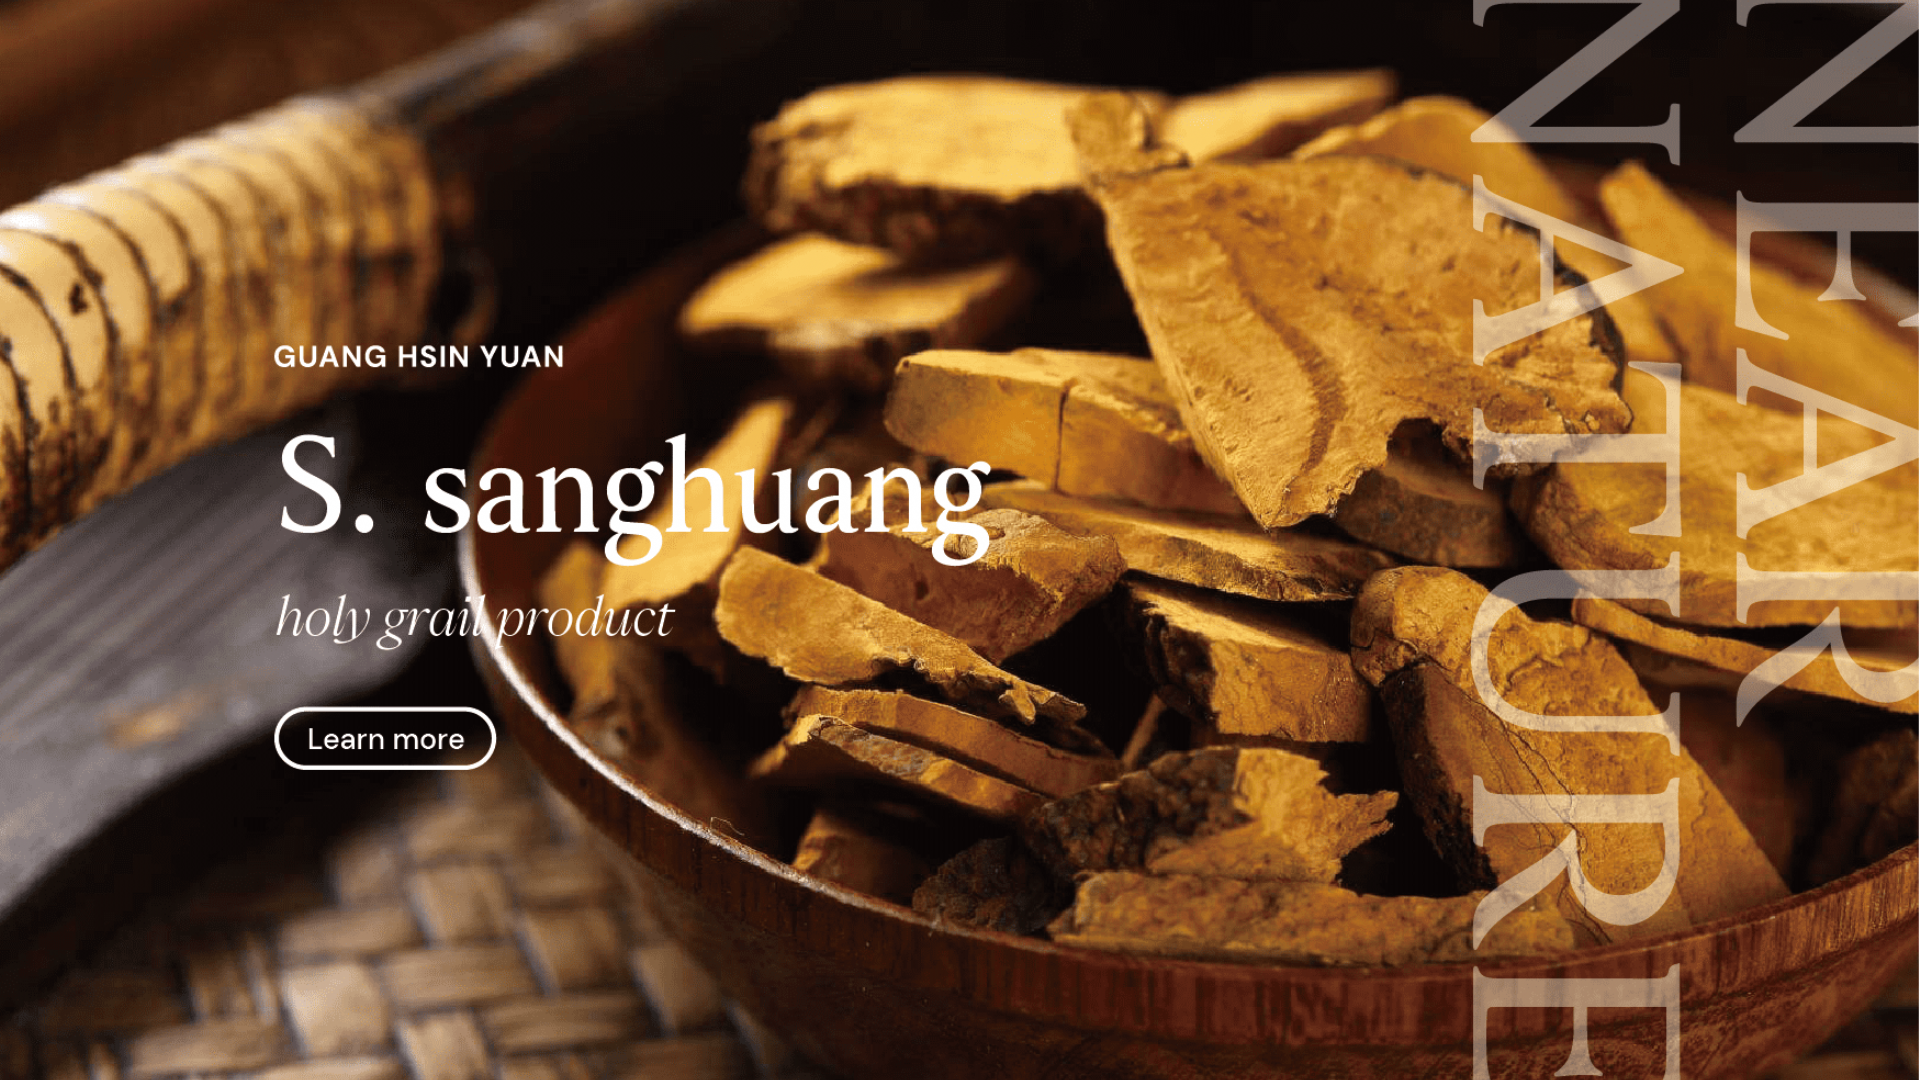 S.sanghuang